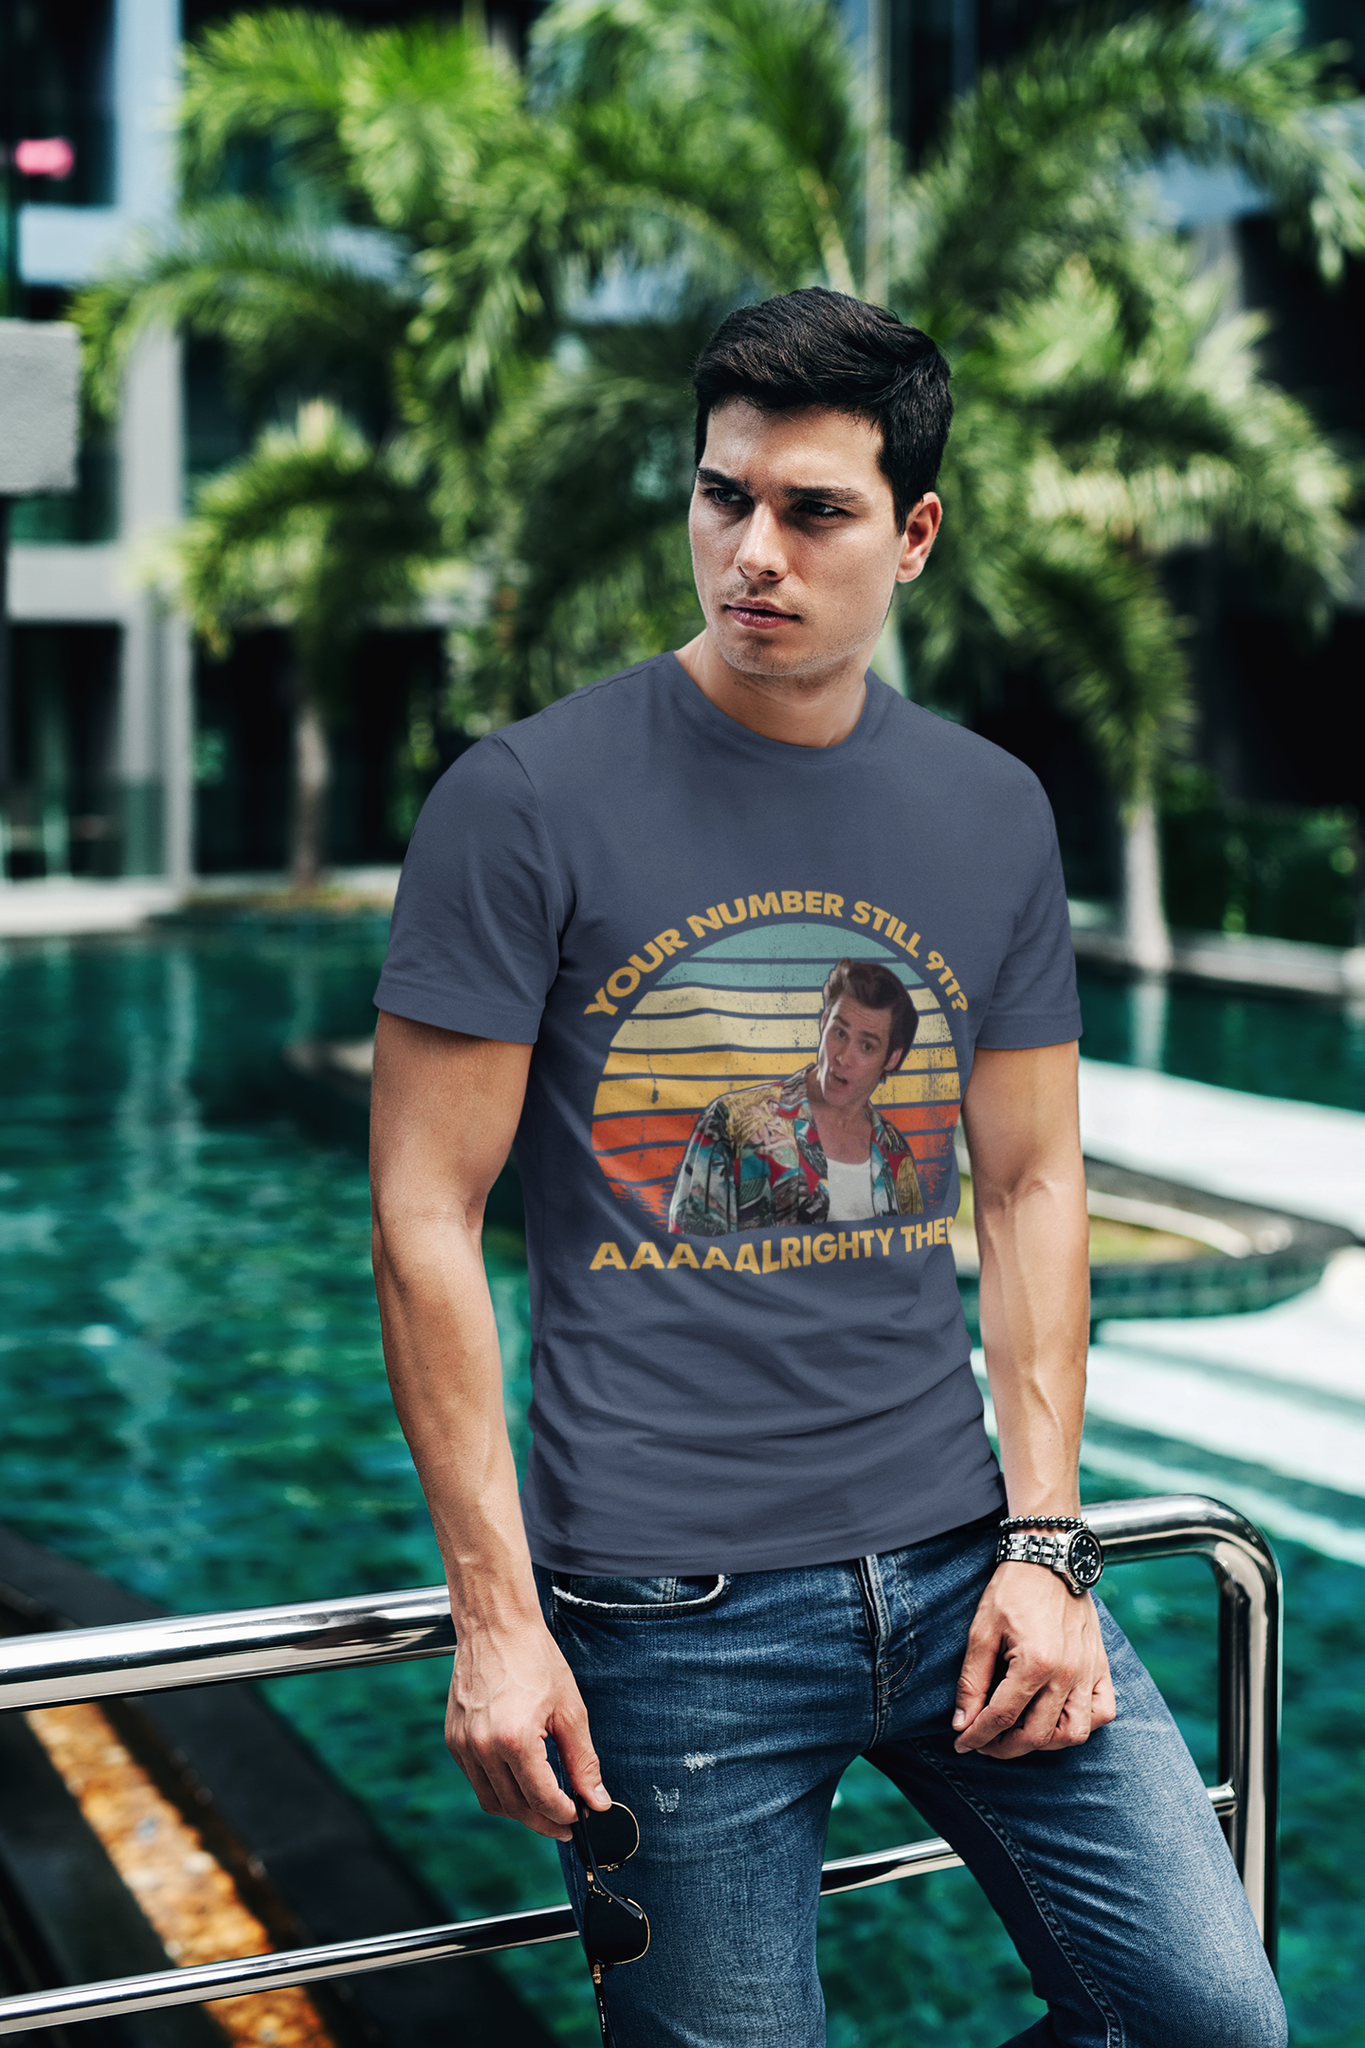 Ace Ventura Pet Detective T Shirt, Ace Ventura T Shirt, Your Number Still 911 Aaaaalrighty Then Tshirt